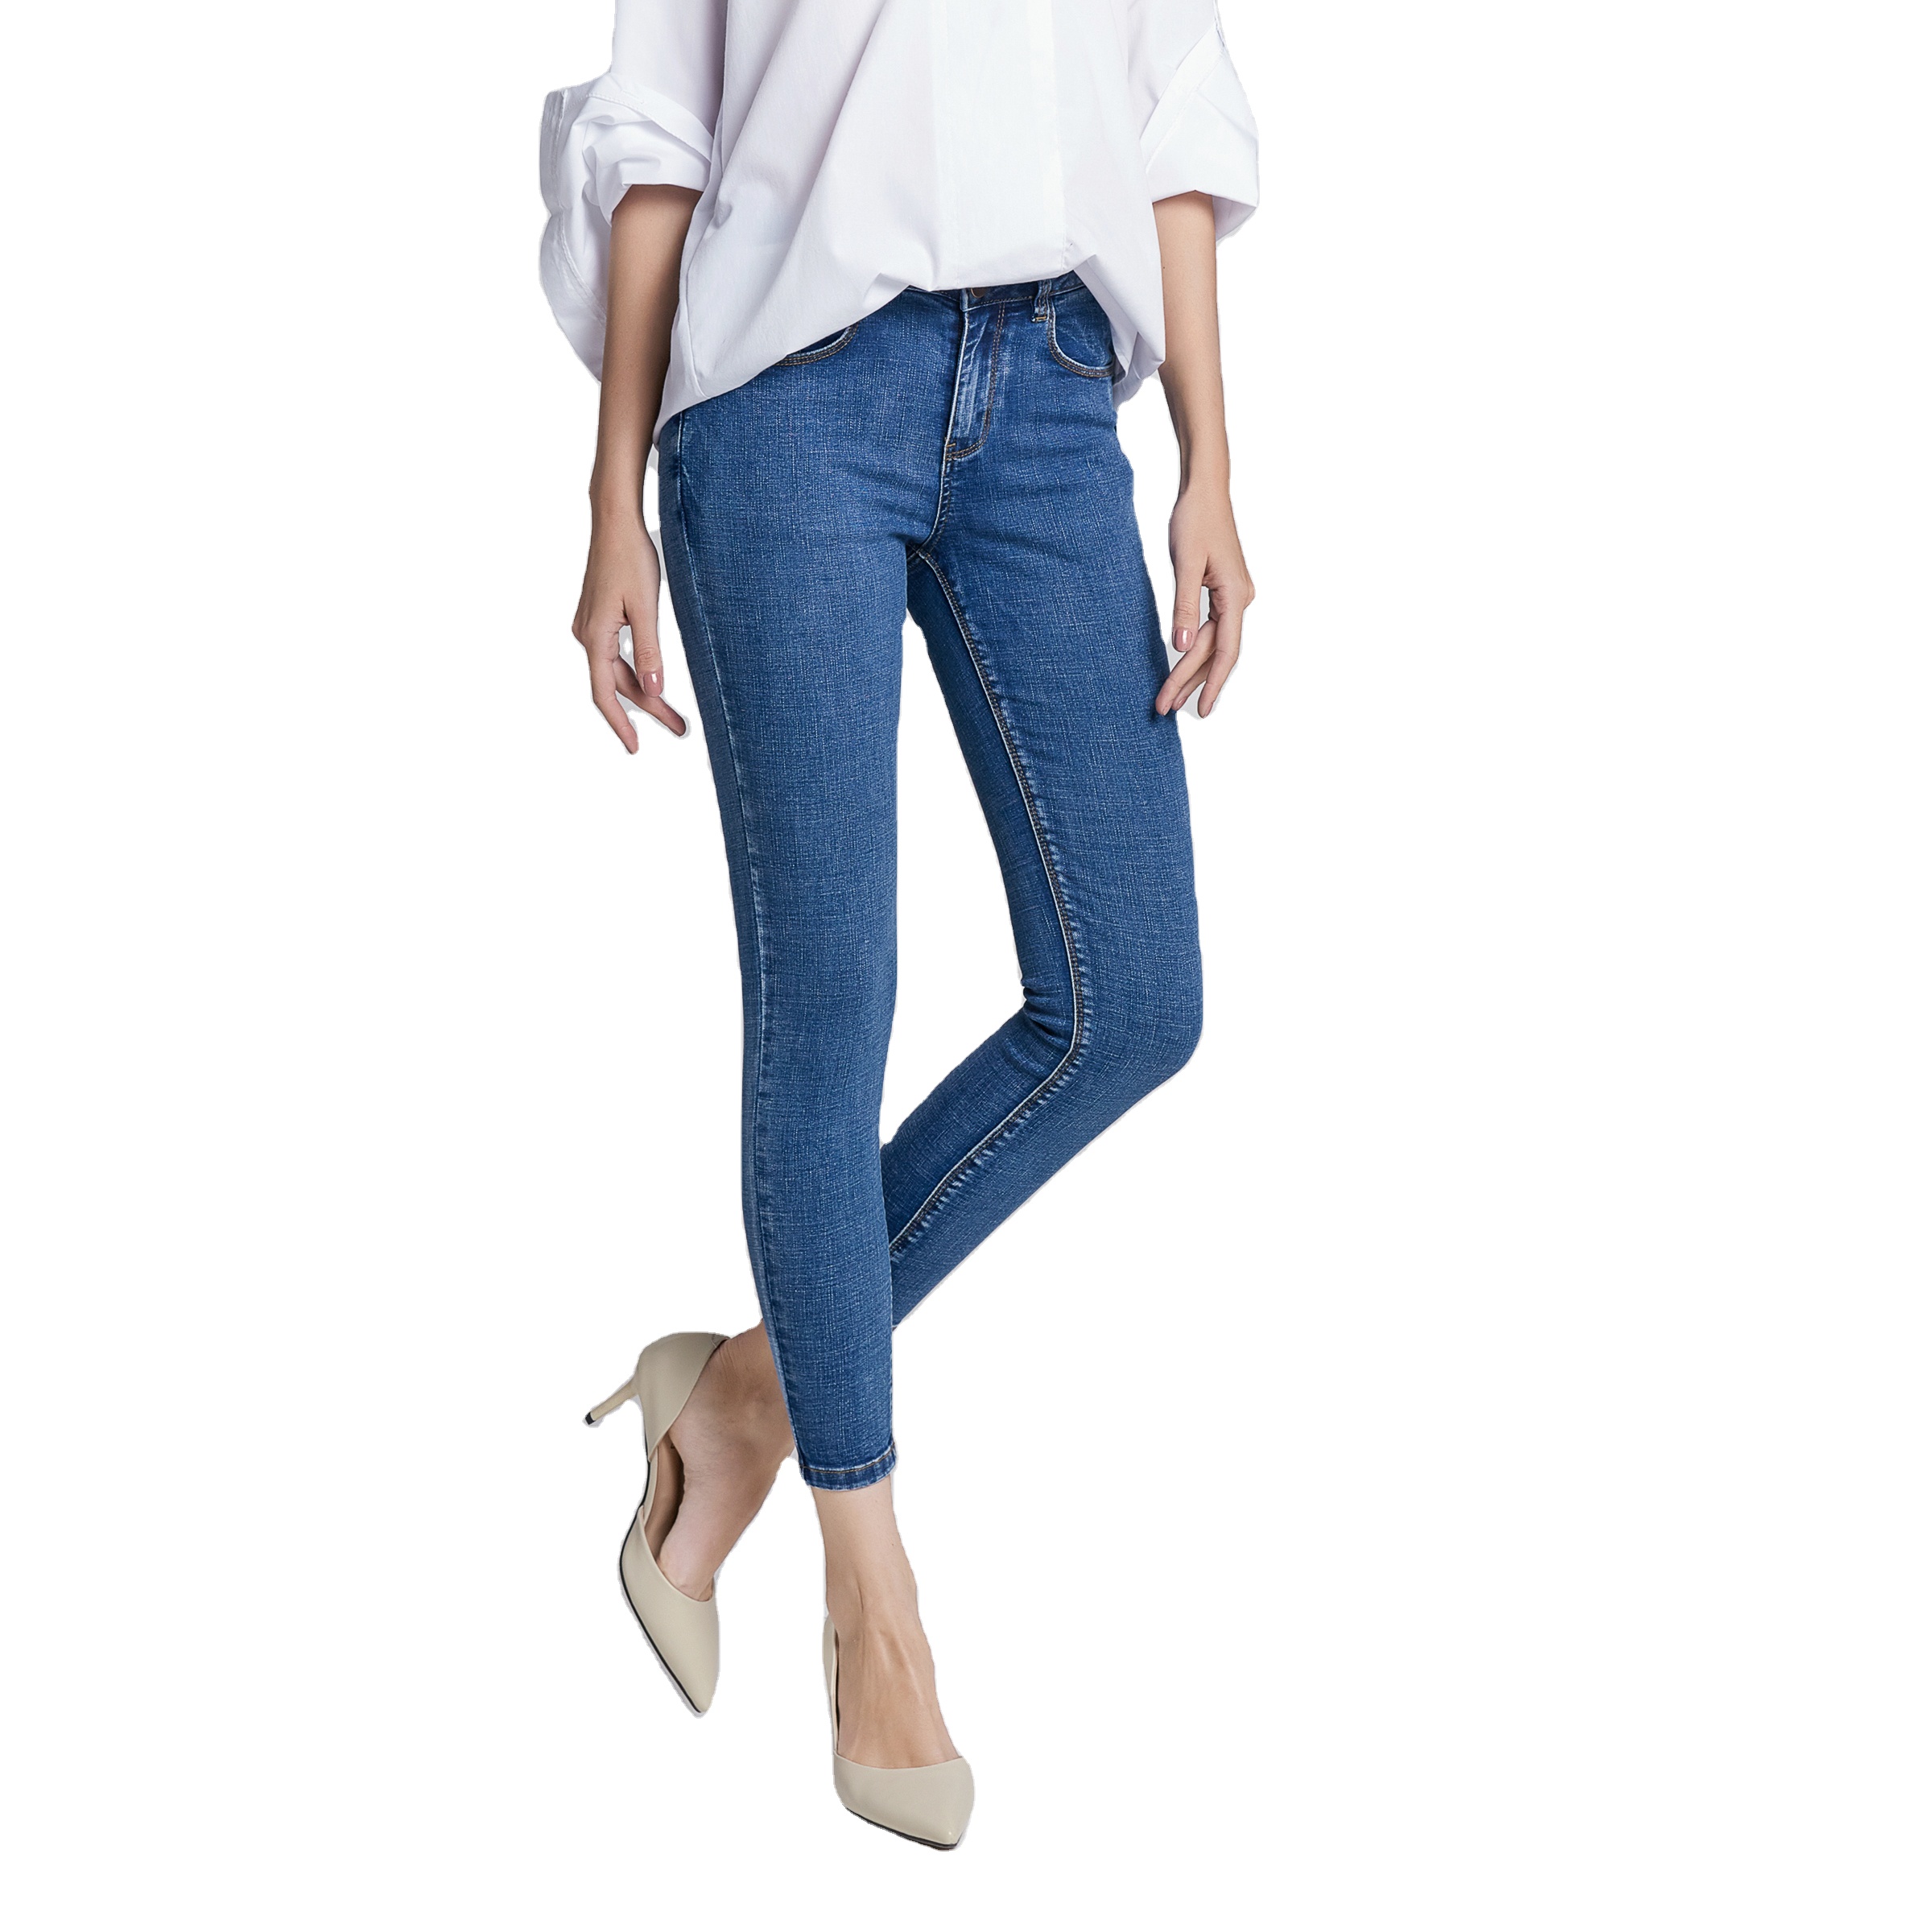 Fashion mix Jeans factory wholesale denim blue slim skinny women denim jeans